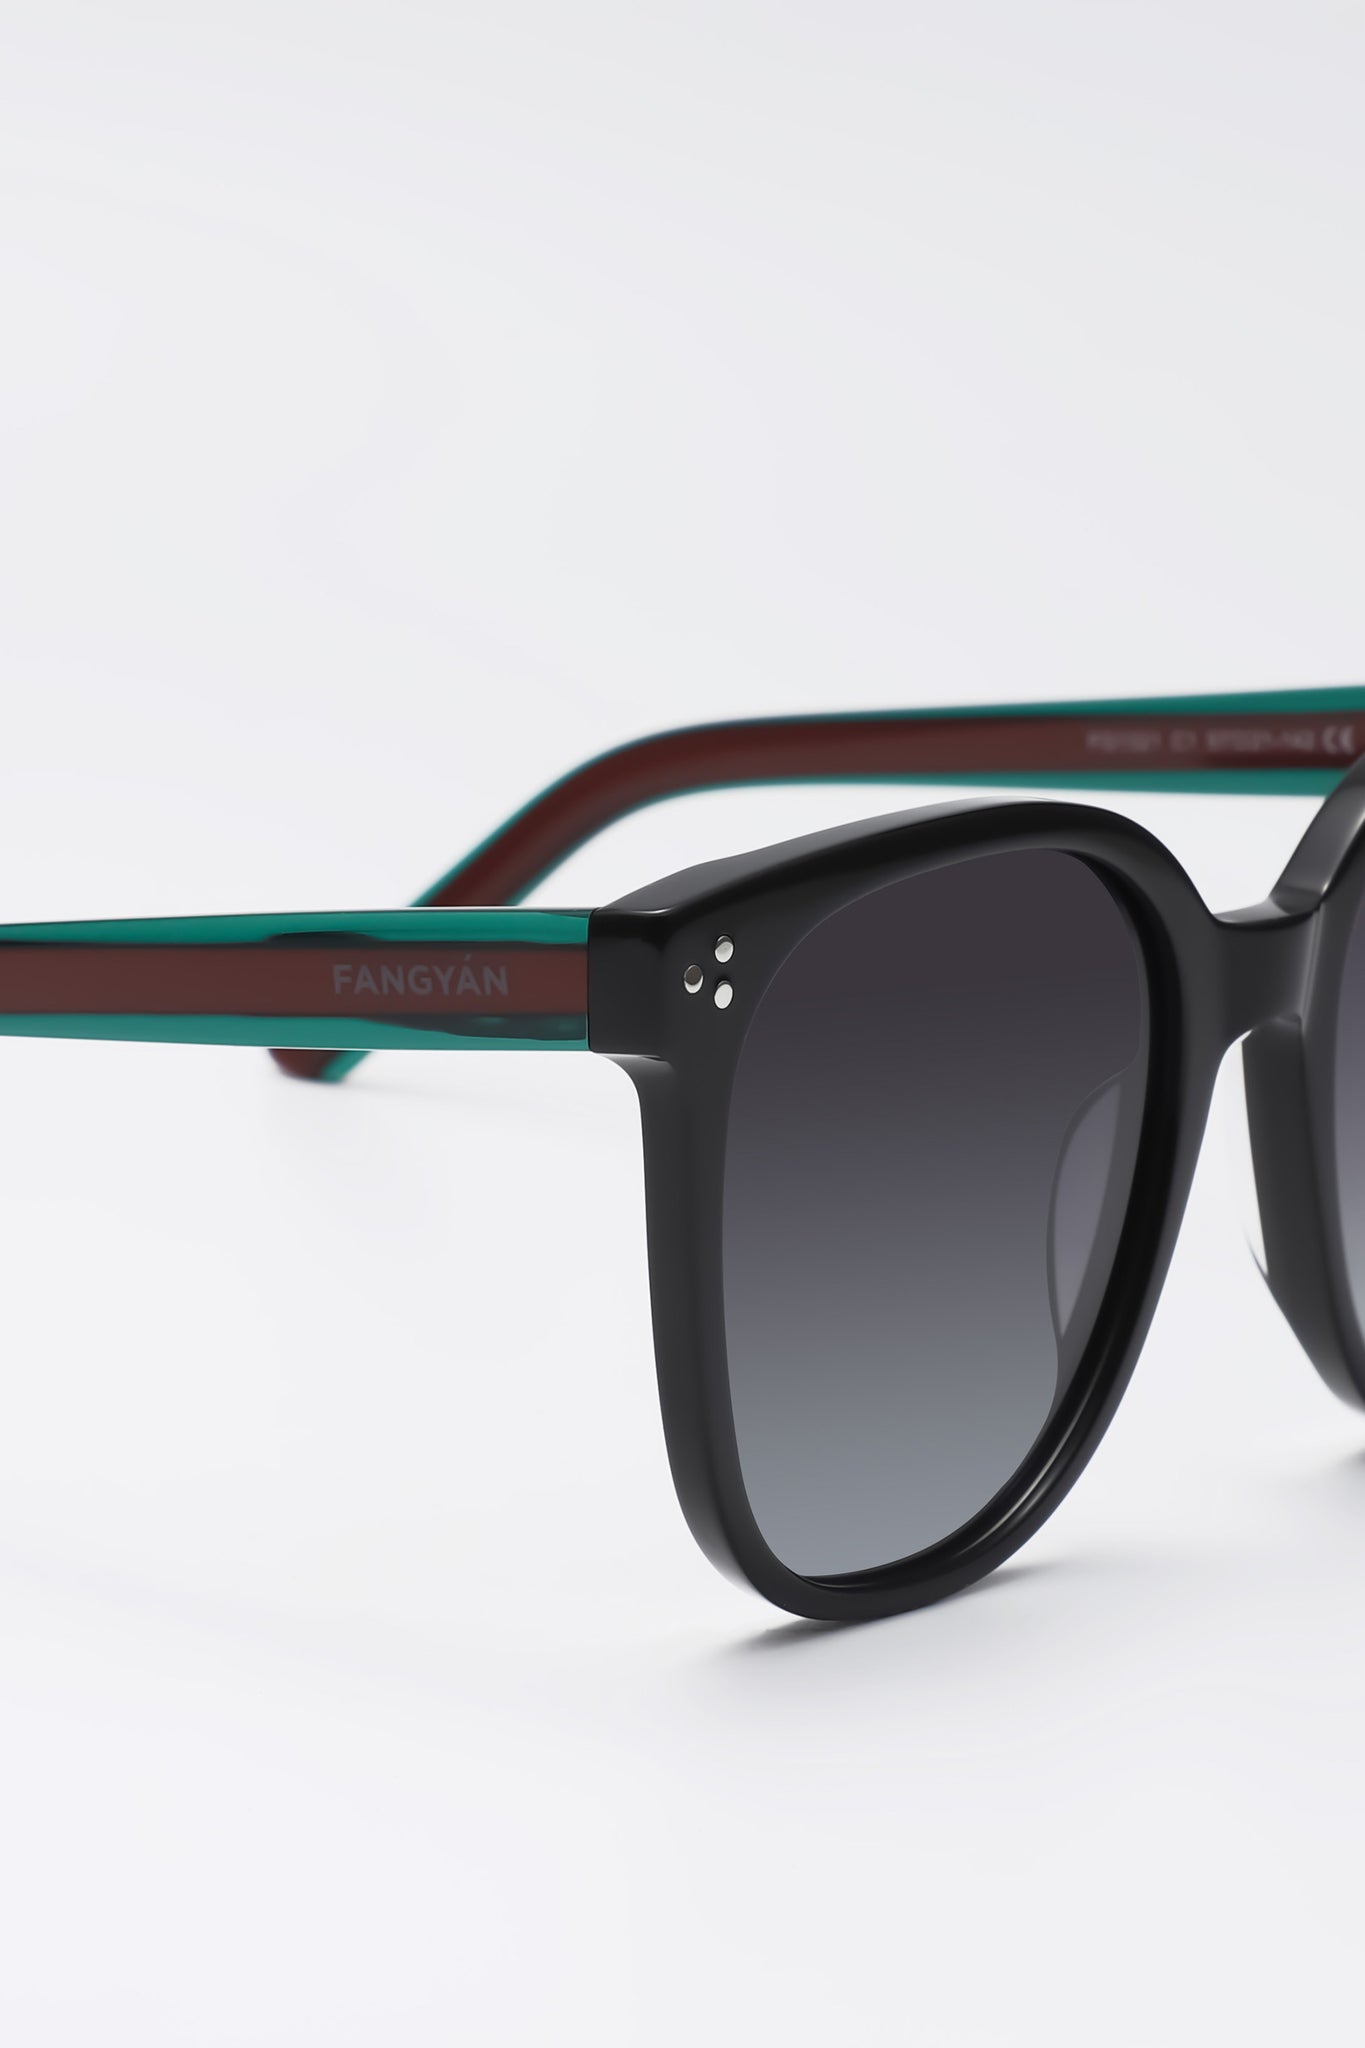 Fangyan | Square-Round Acetate Black Sunglasses